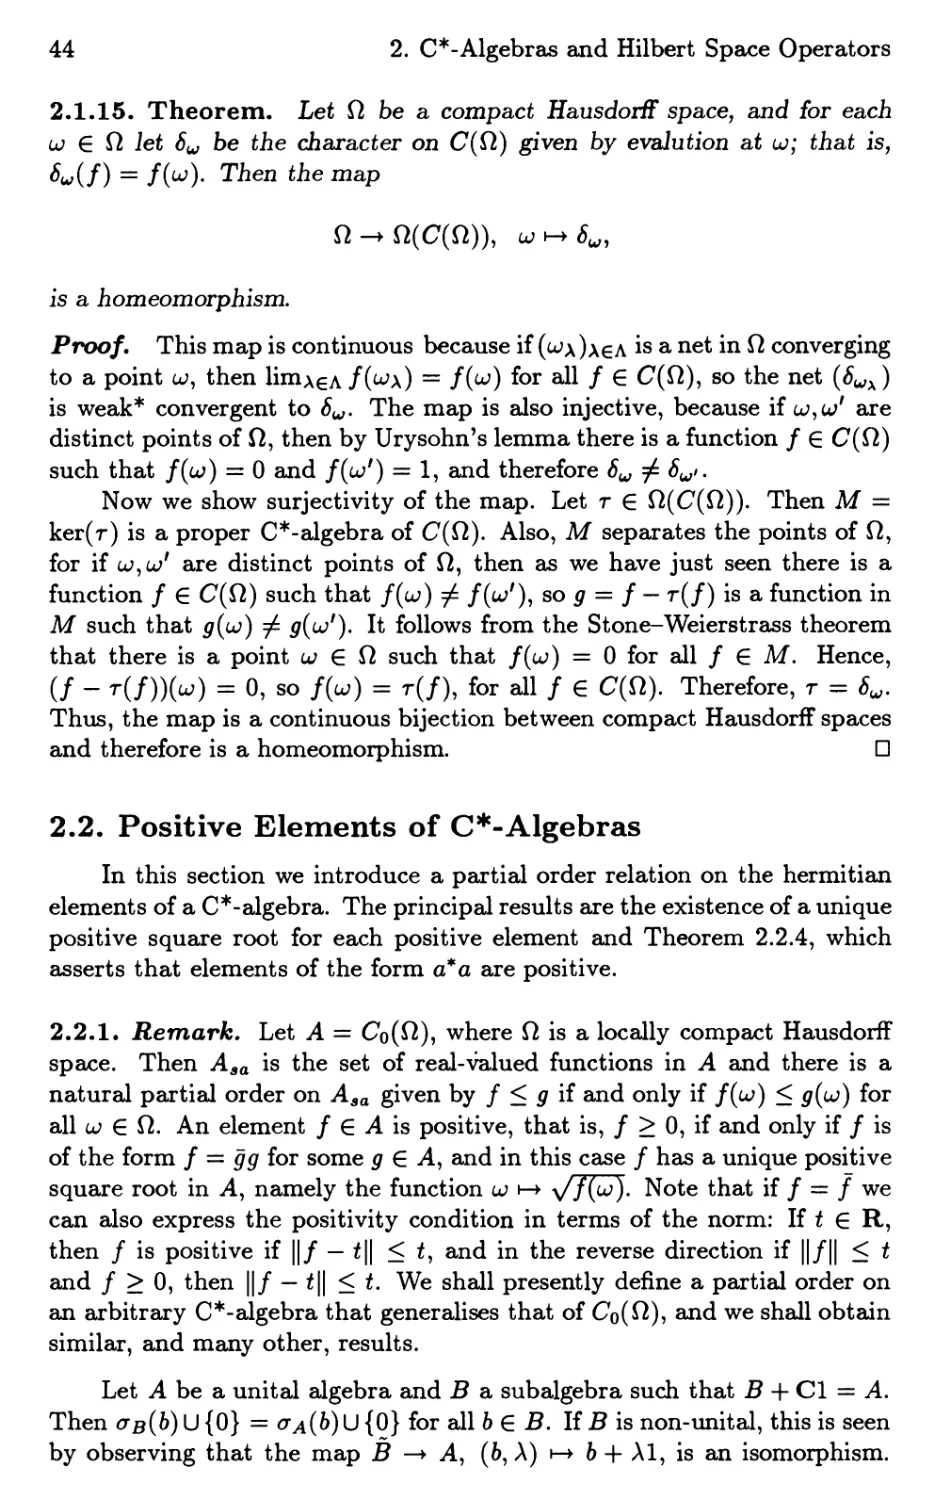 2.2. Positive Elements of C$^\ast$-Algebras